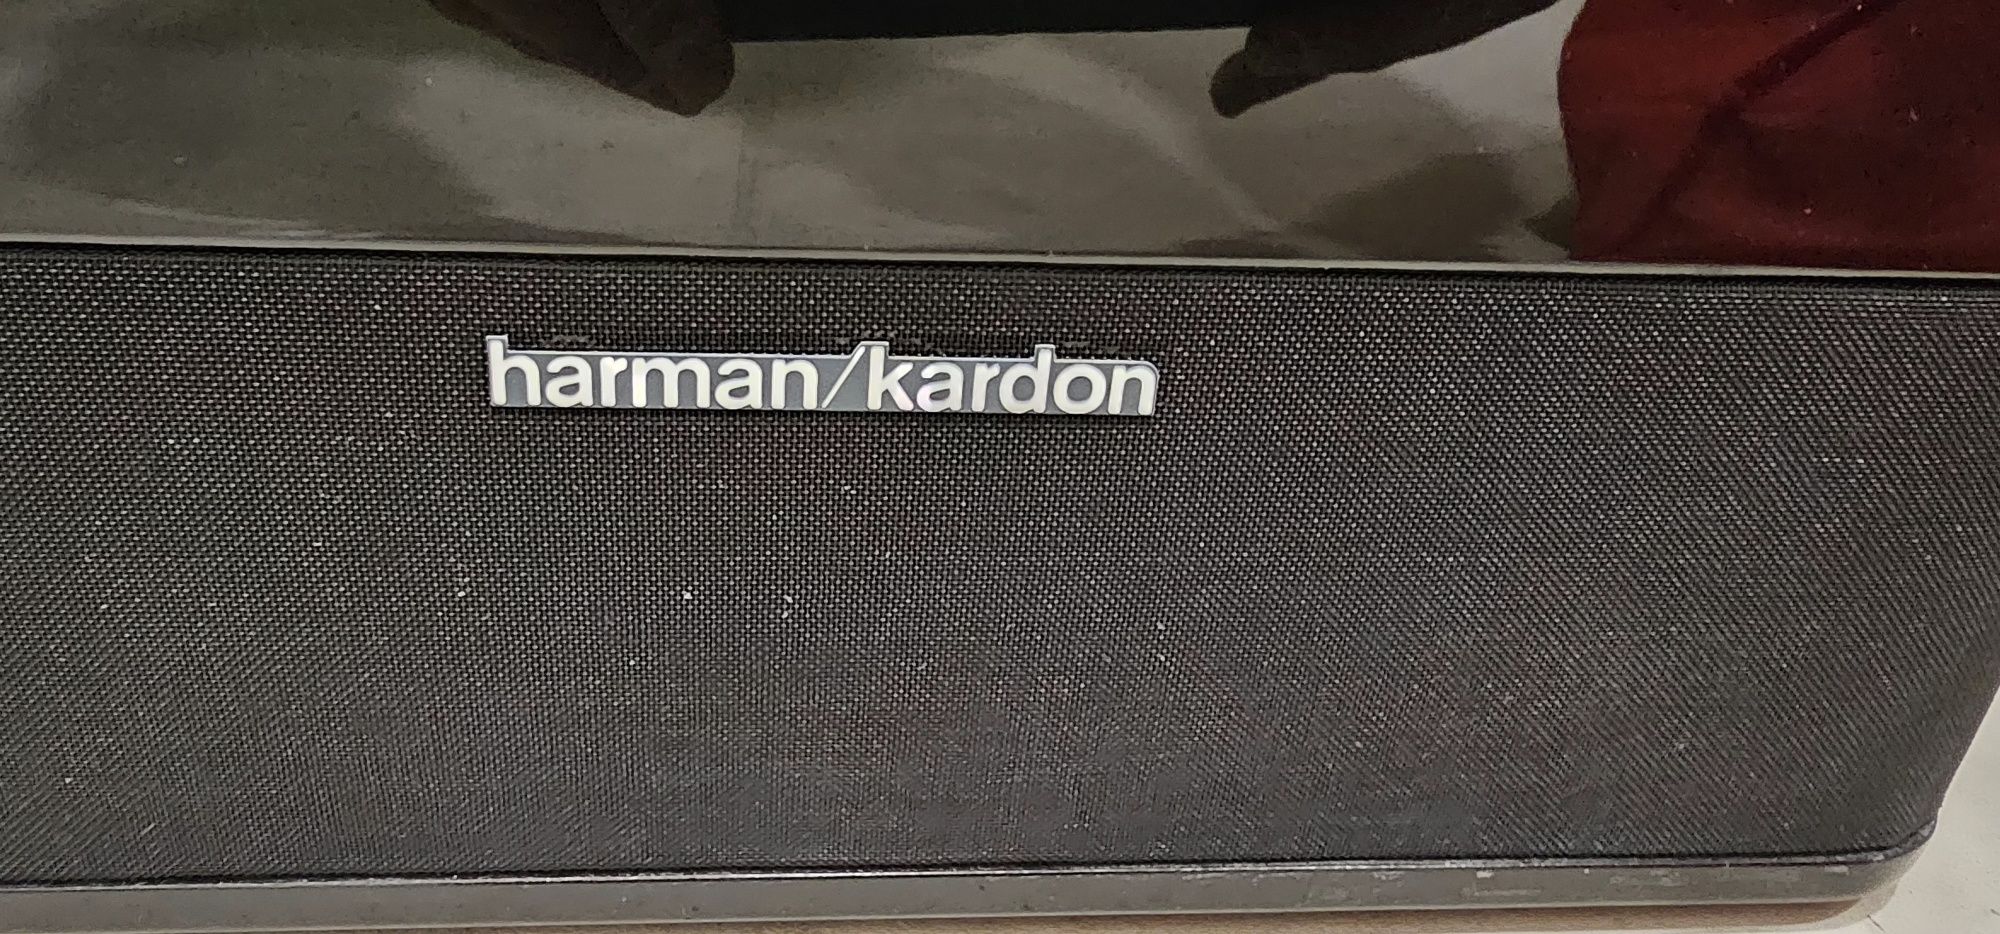 Harman Kardon full